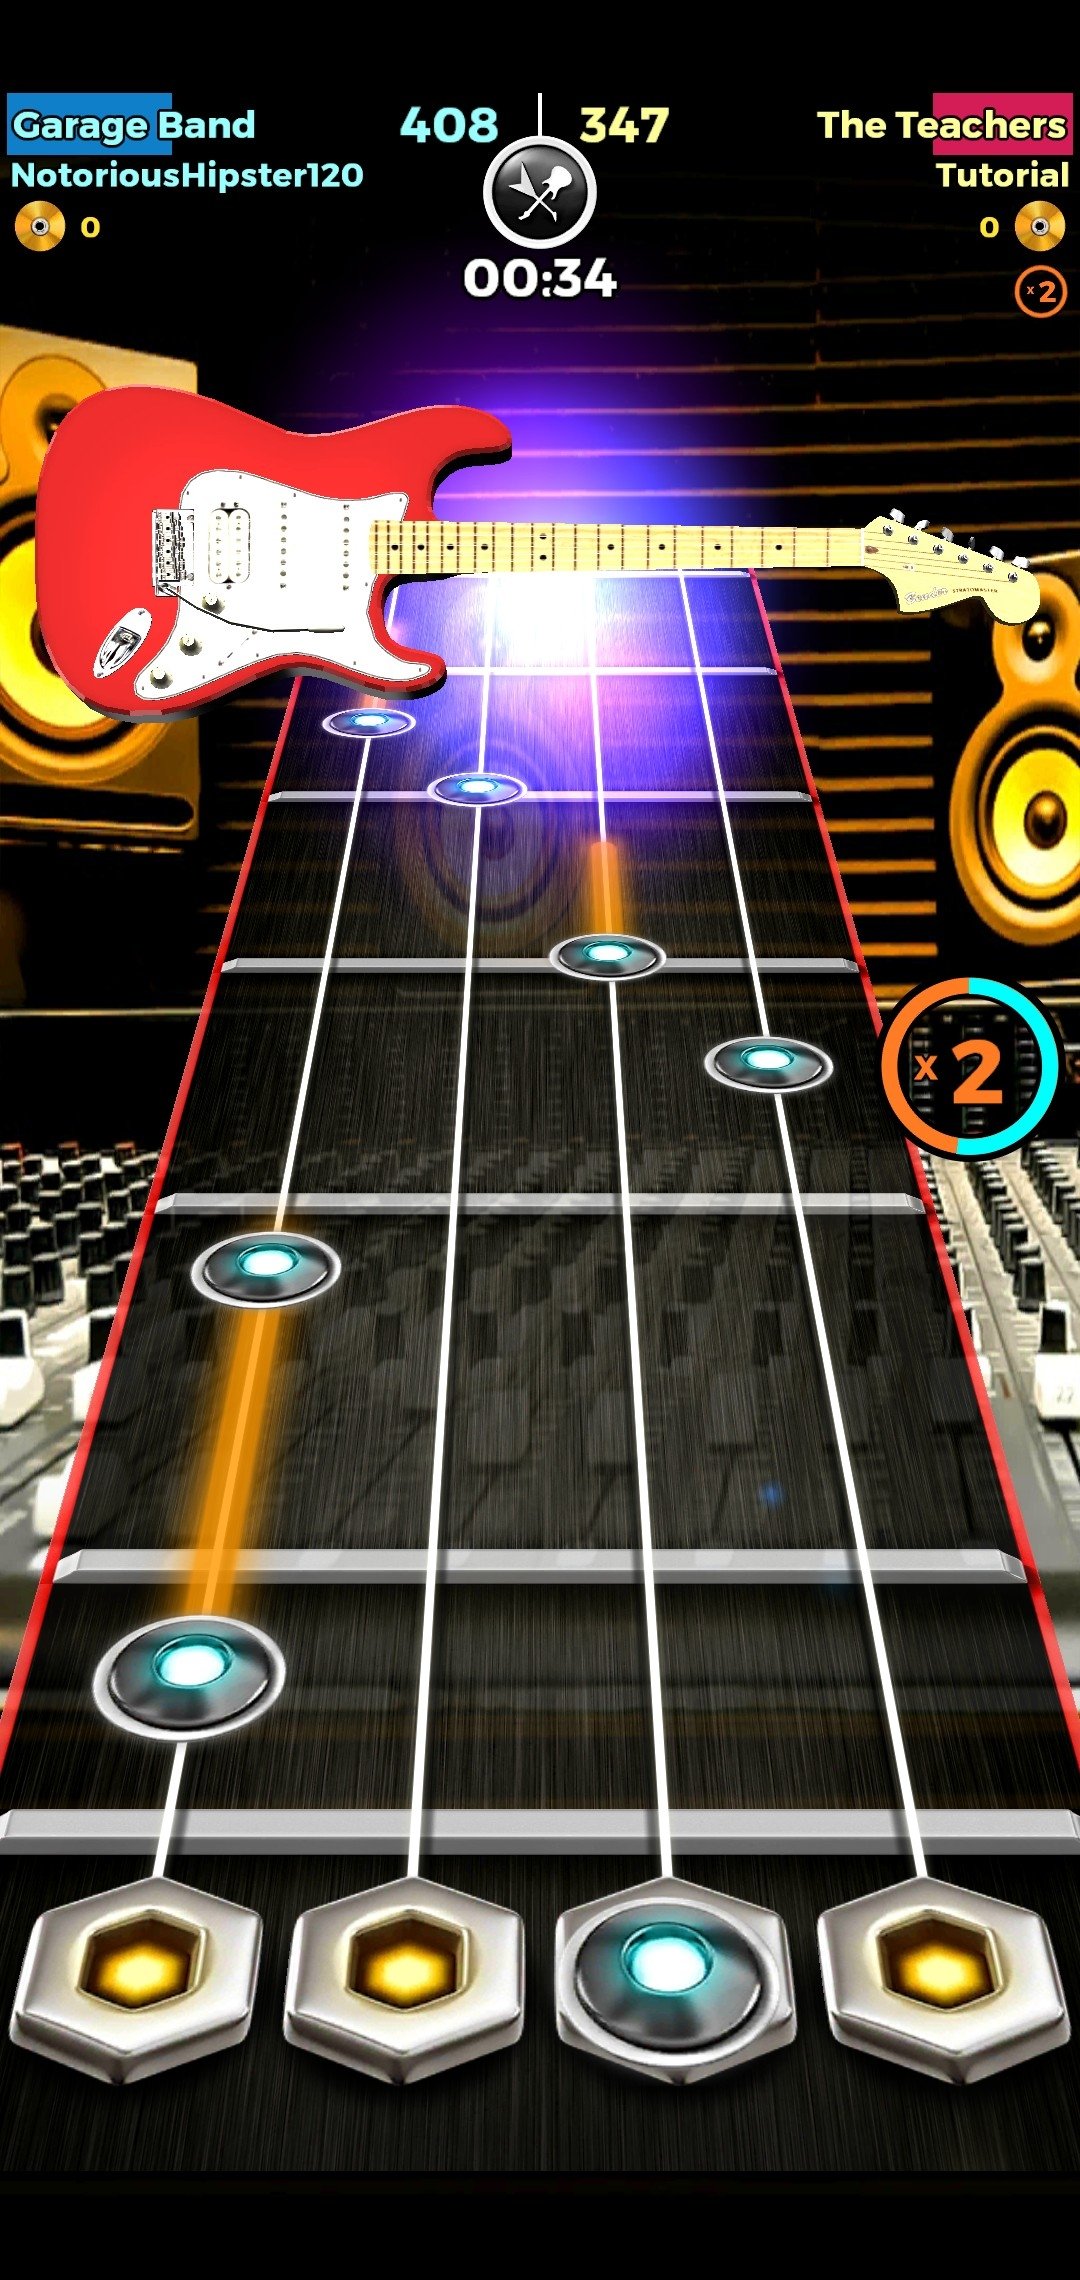 Guitar Band Battle 1 7 2 Android用ダウンロードapk無料